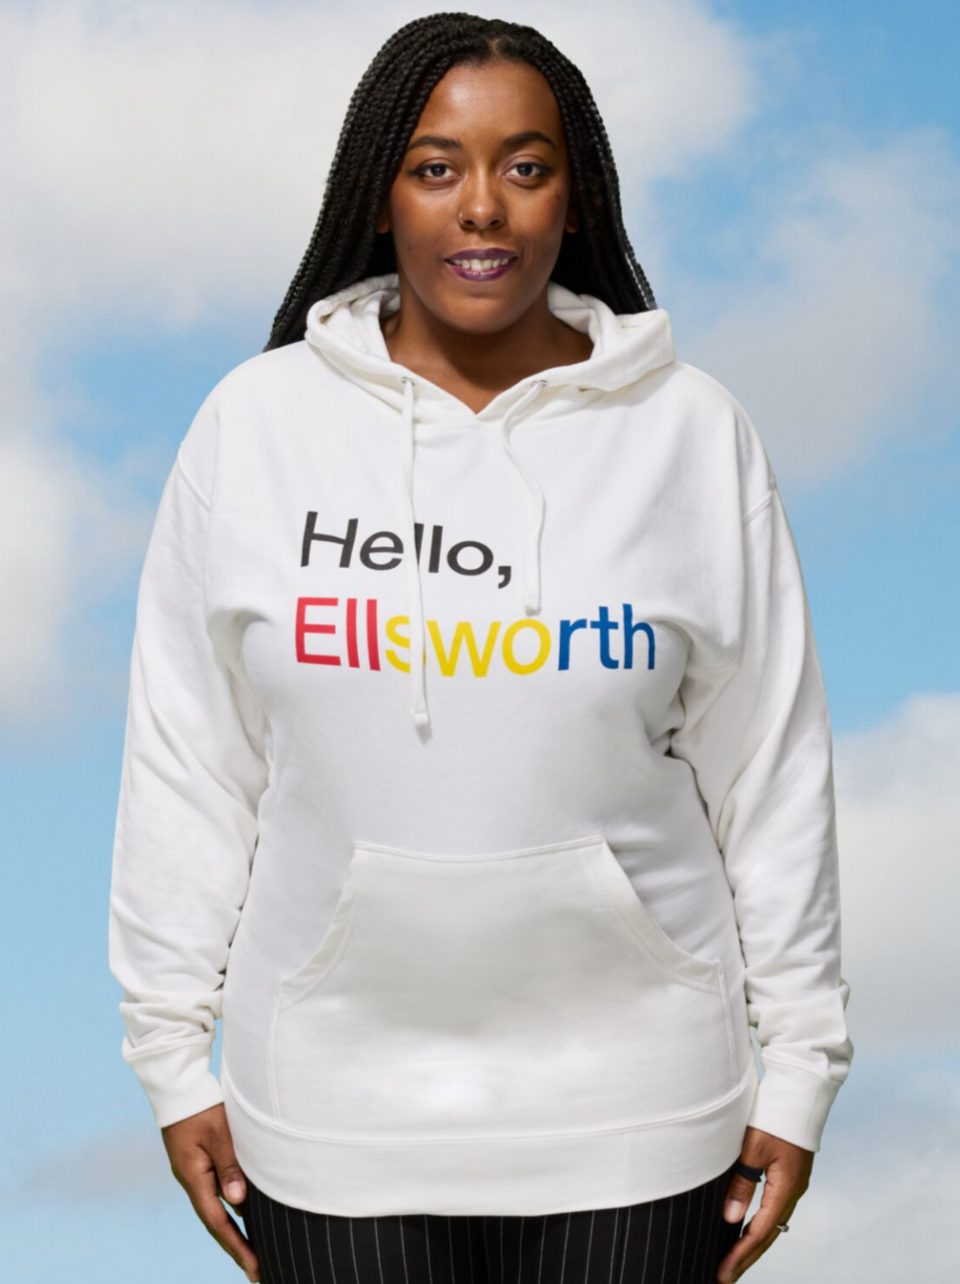 Hello, Ellsworth Hooded Sweatshirt - ellsworthhoodie